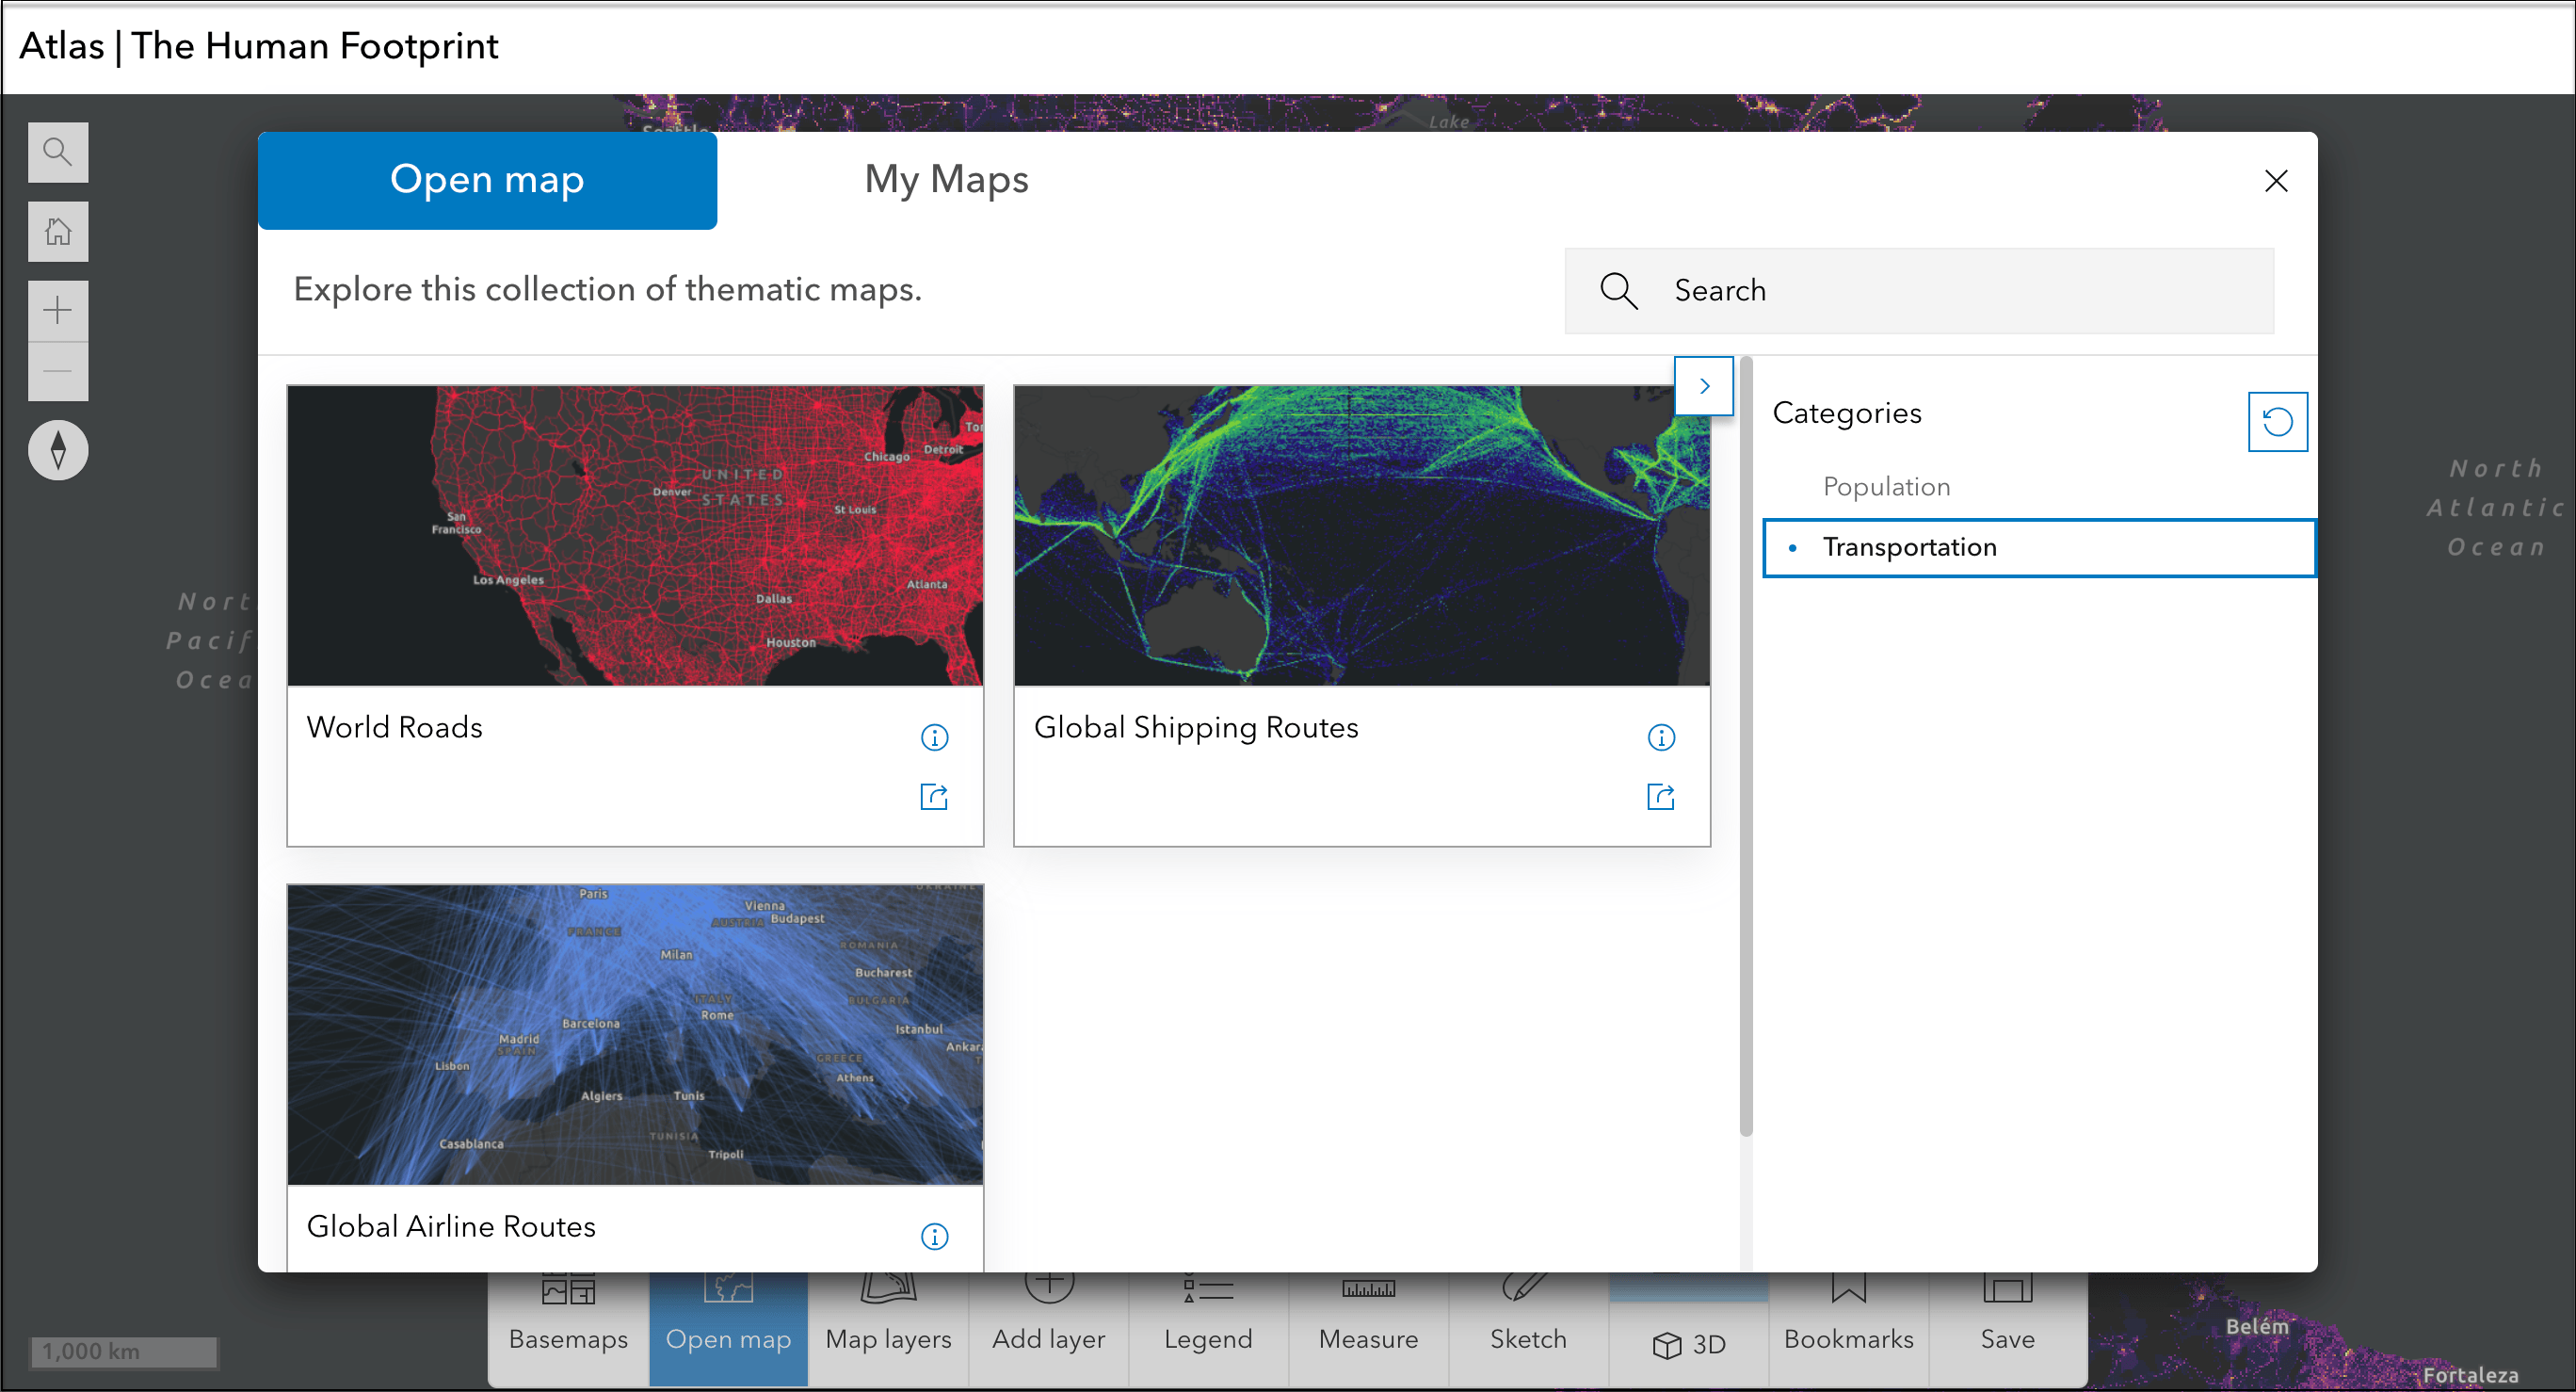 Image of Open maps panel in Atlas